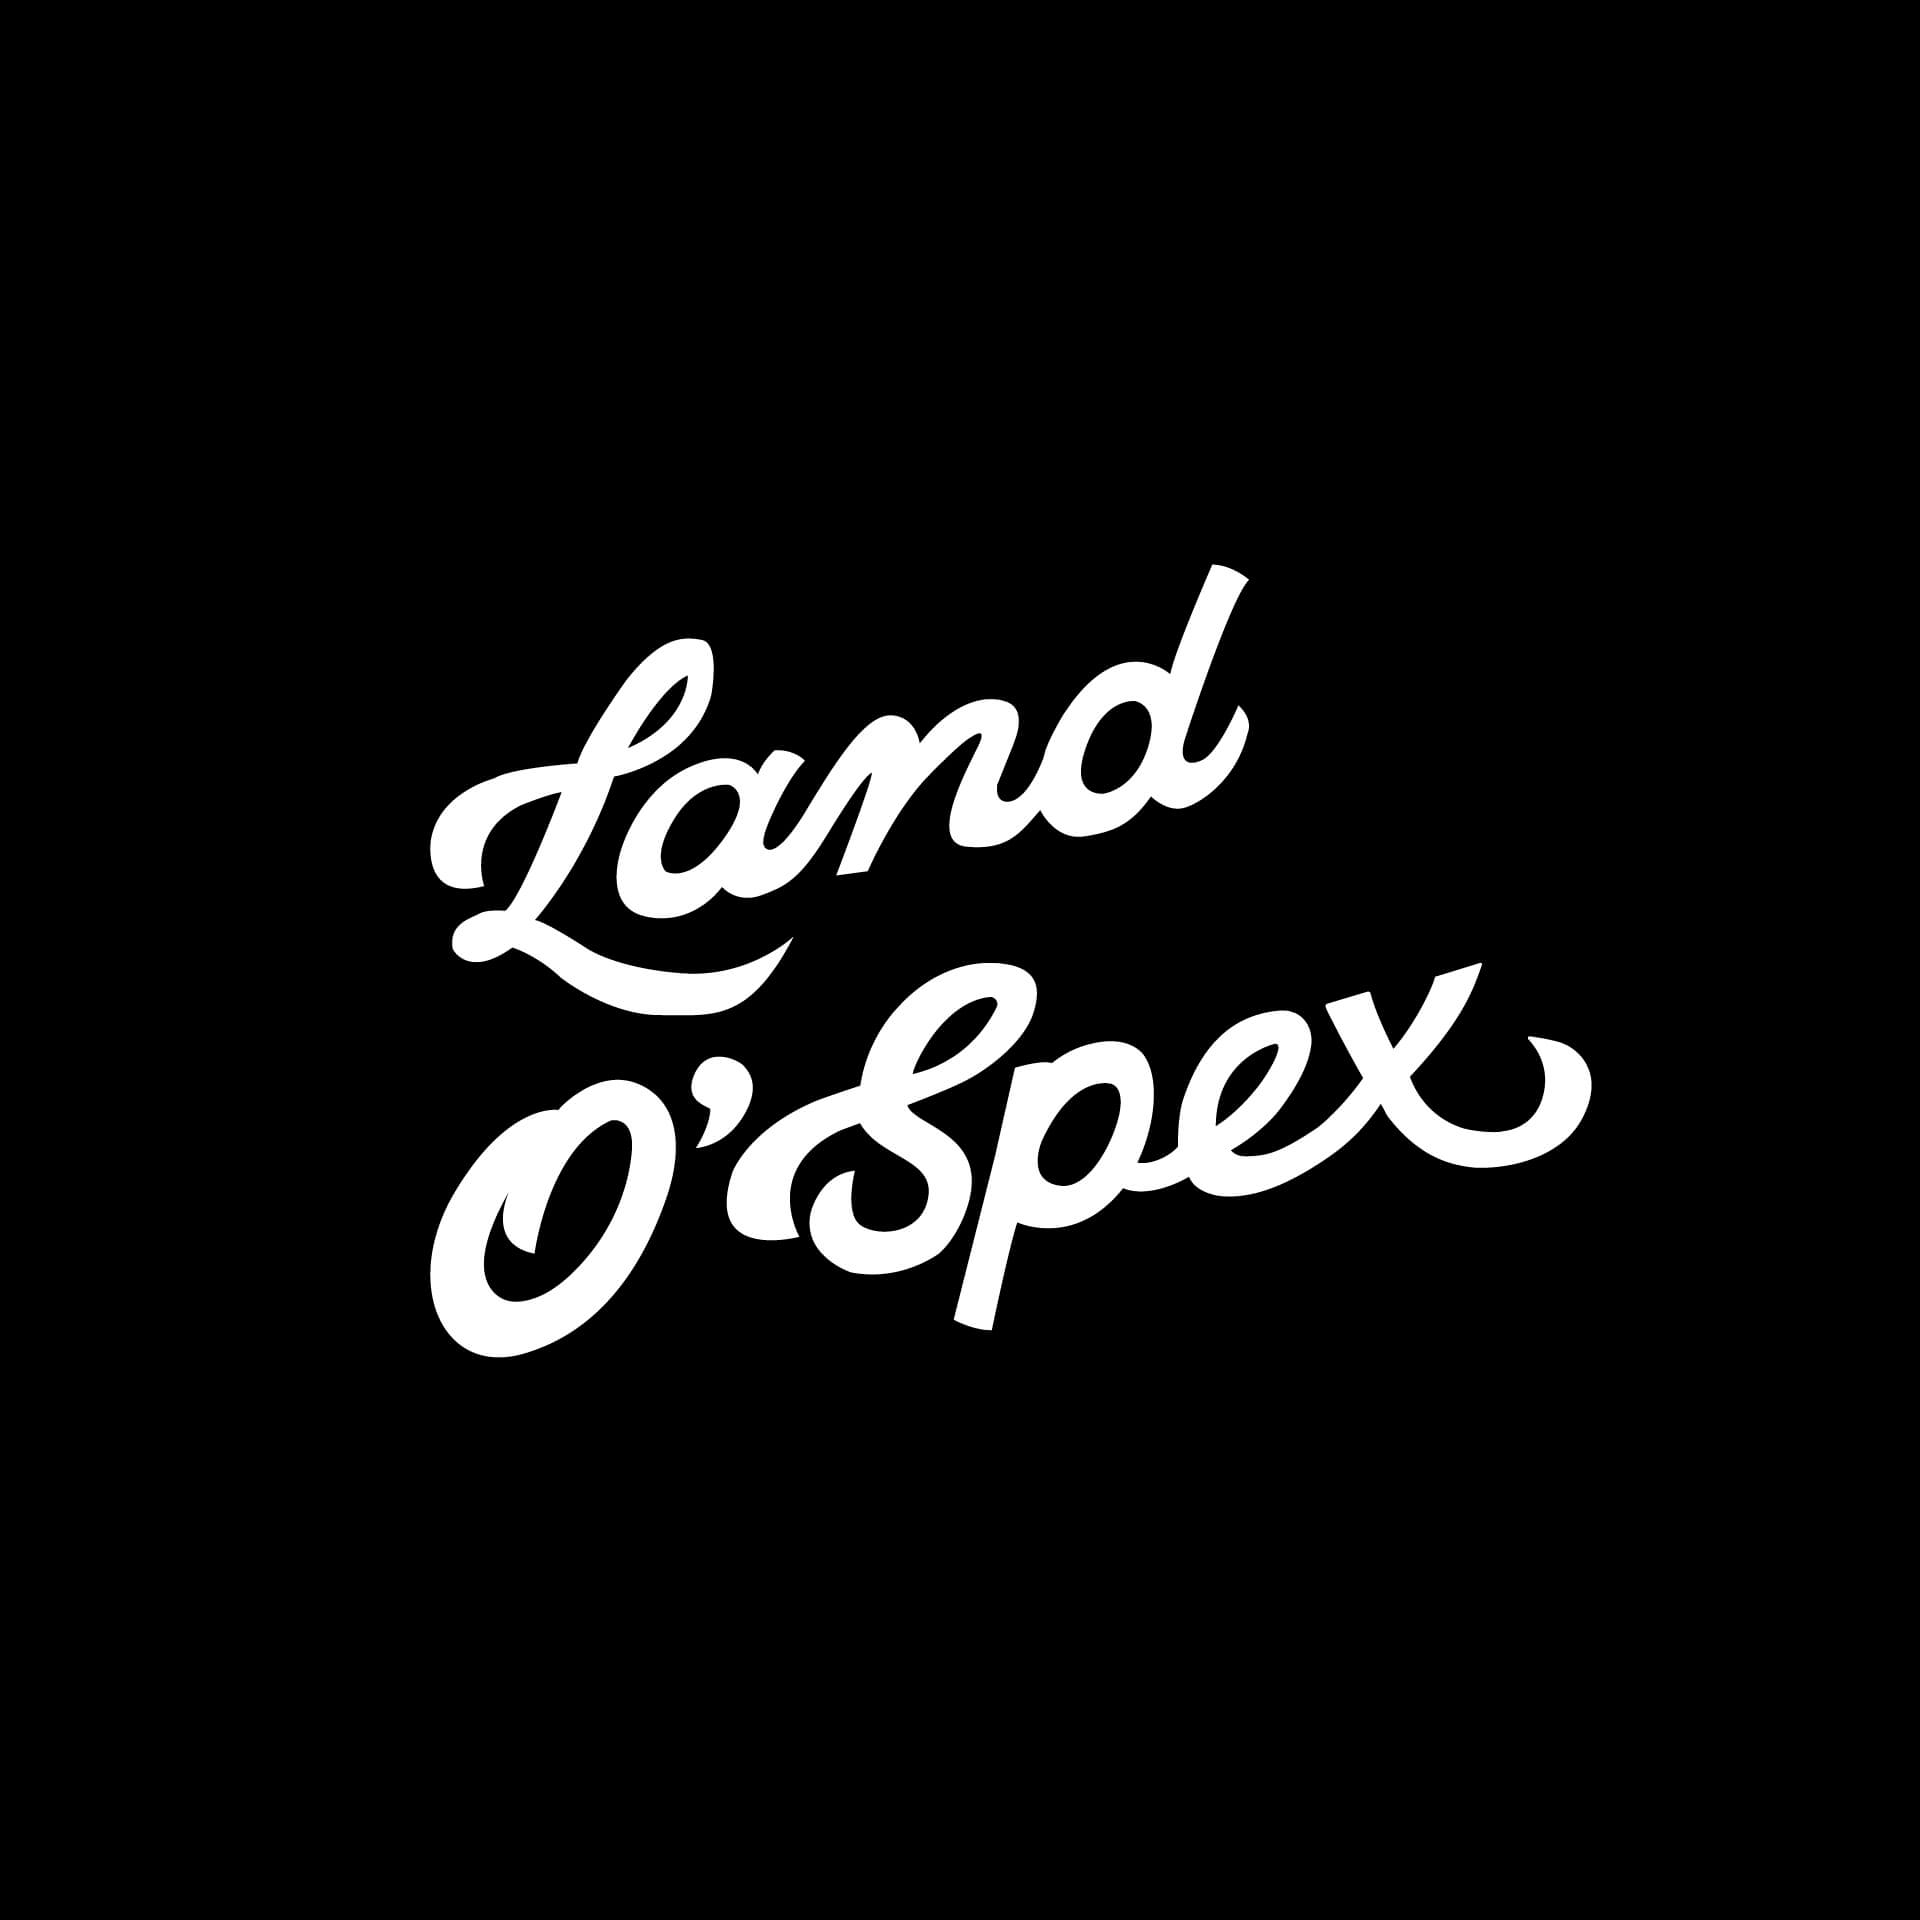 Cursive type logo for Land O'Spex.